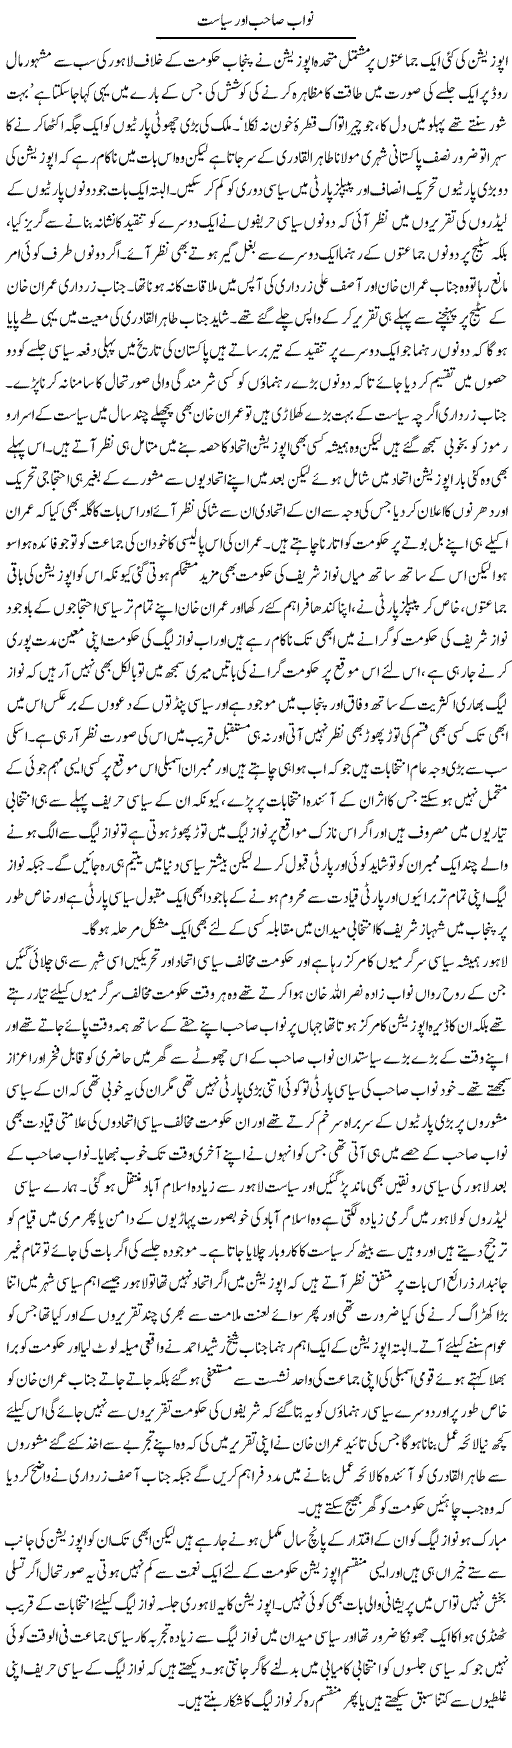 Nawab Sahib Aur Siyasat | Abdul Qadir Hassan | Daily Urdu Columns